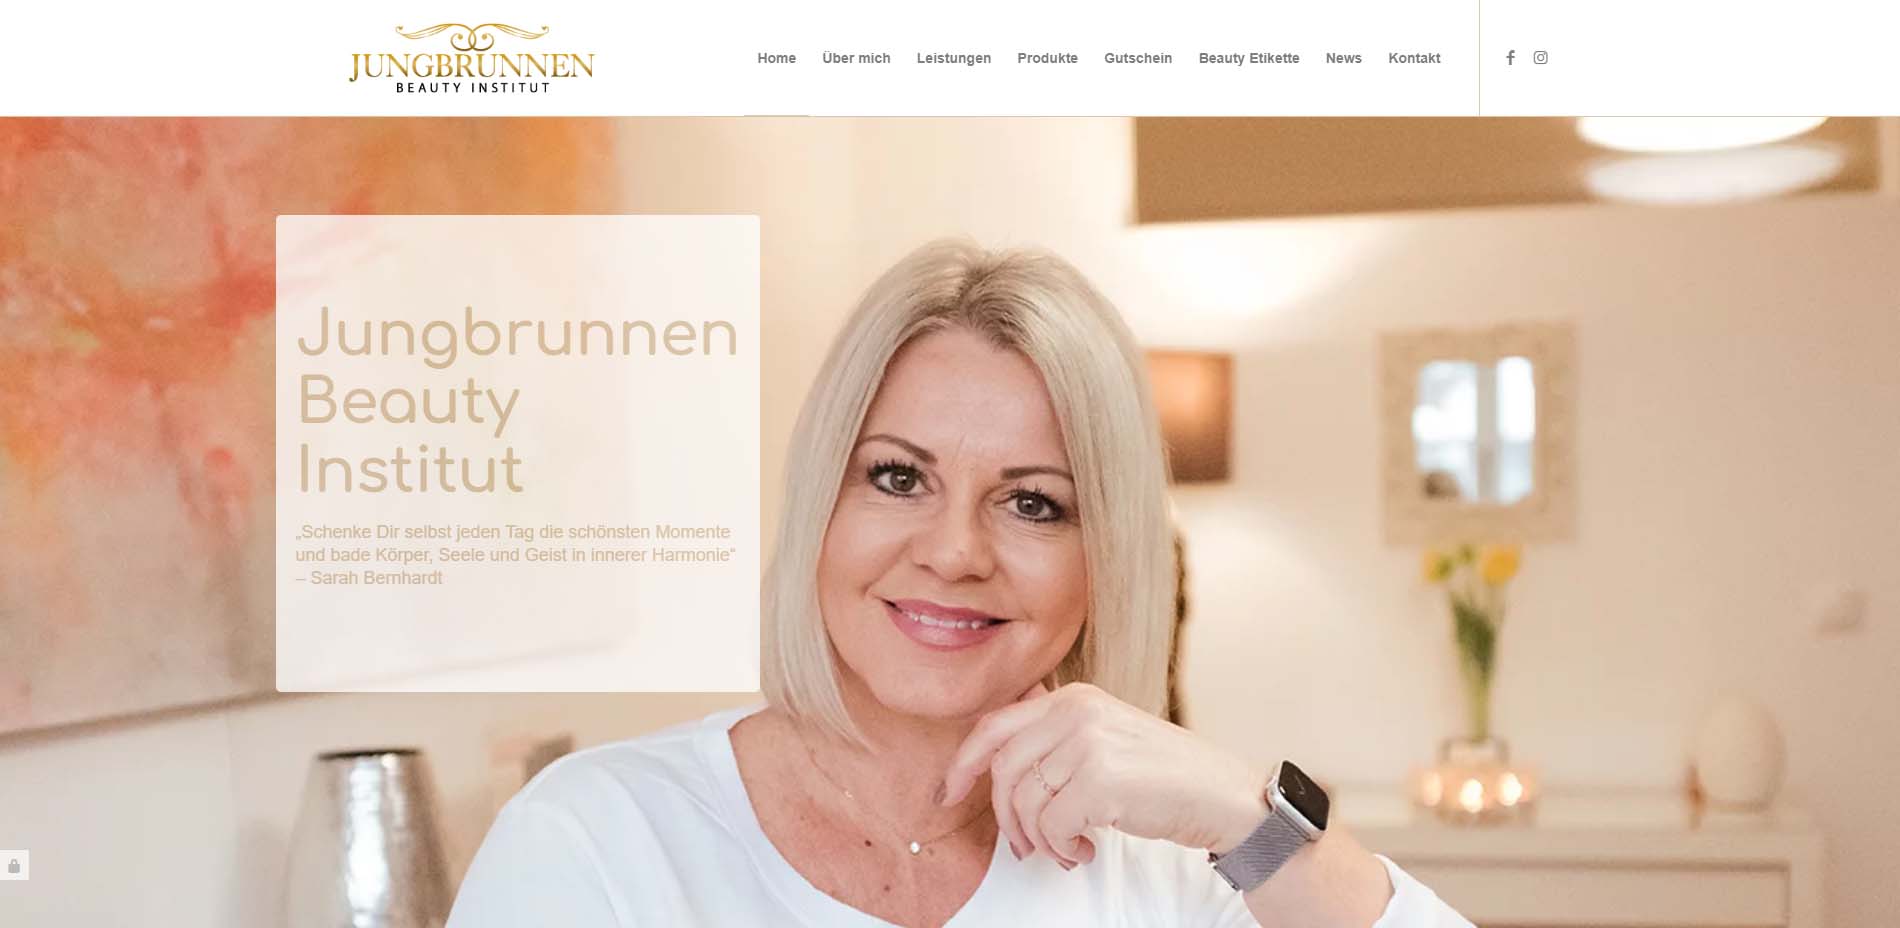 Jungbrunnen Beauty Institut